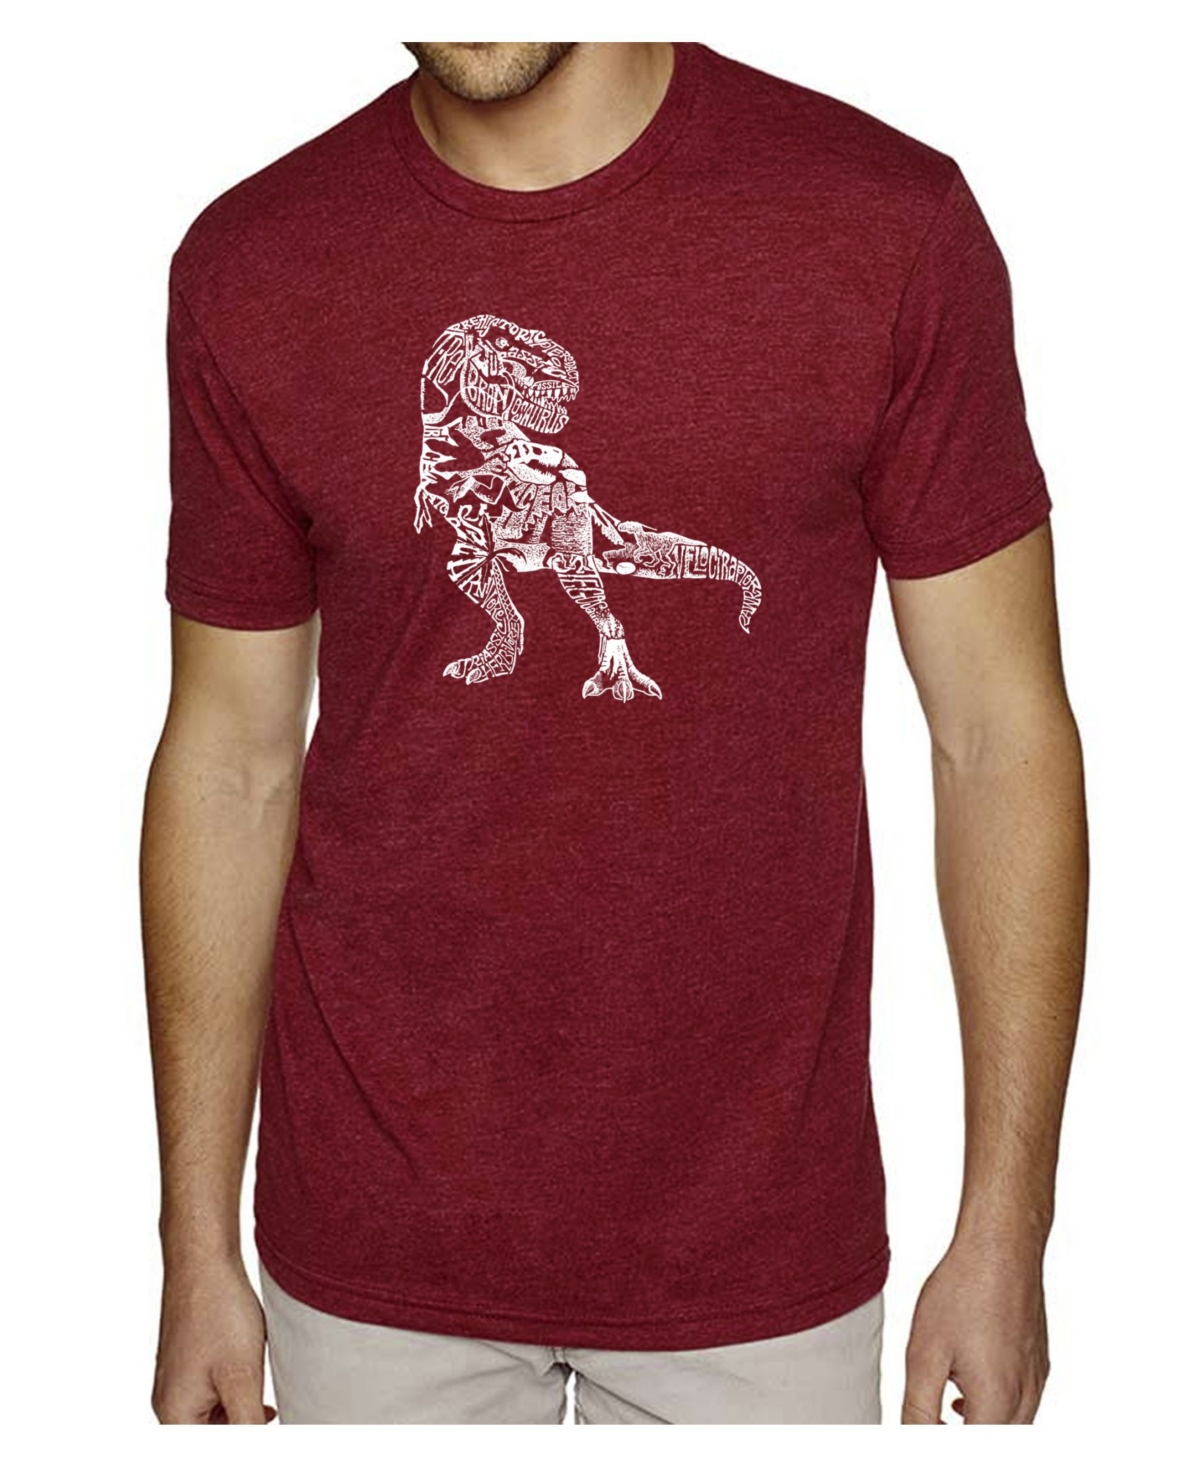 Mens Premium Blend Word Art T-Shirt - Dinosaur - Burgundy